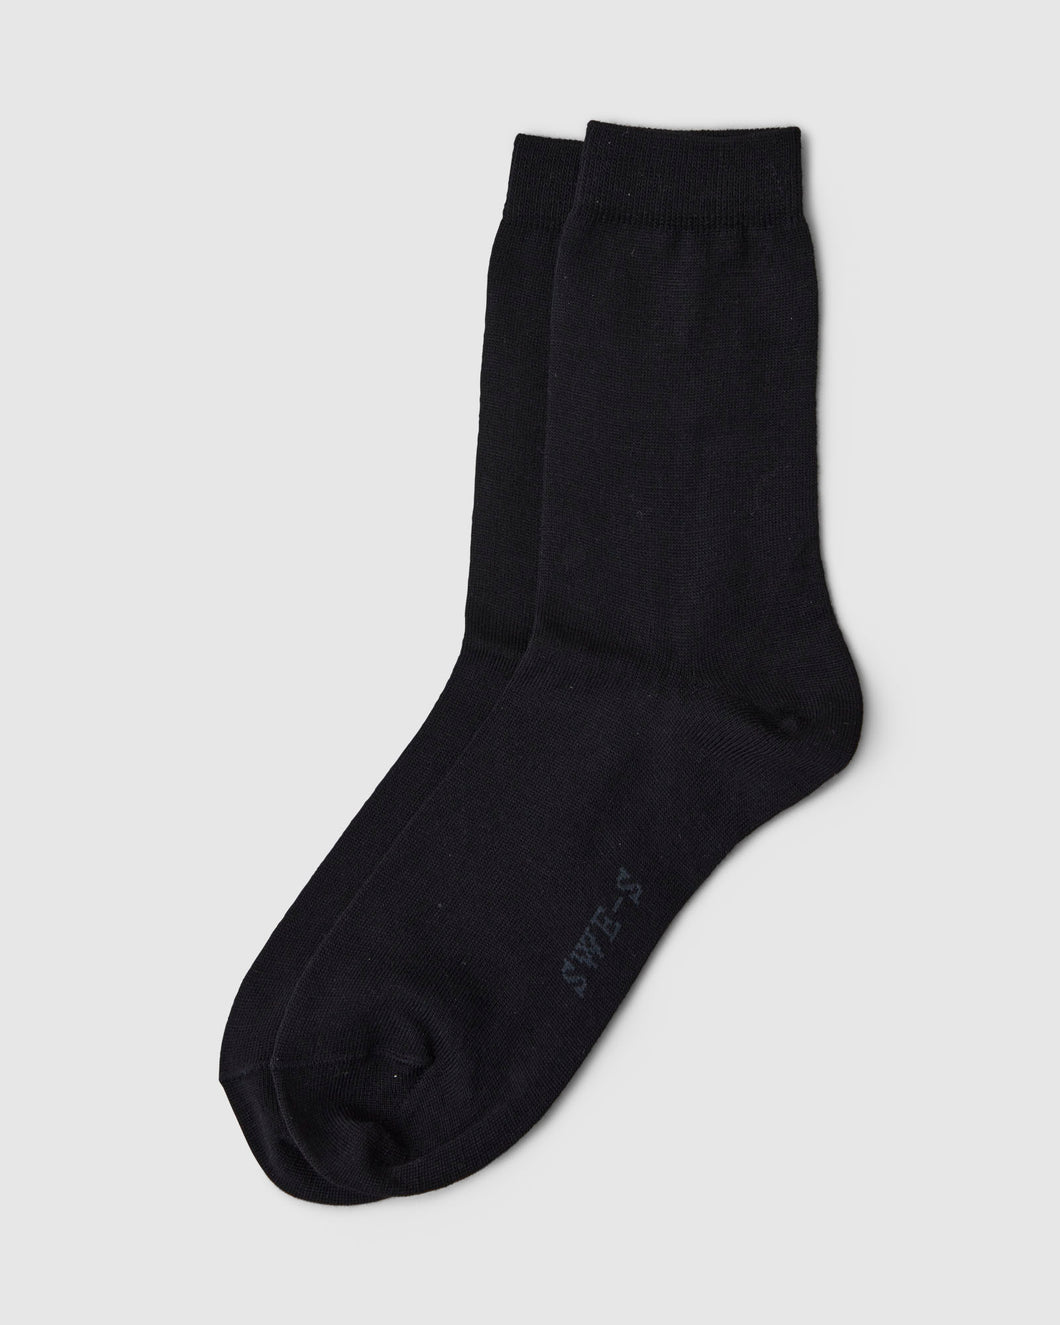 Johanna wool schwarz - Socken